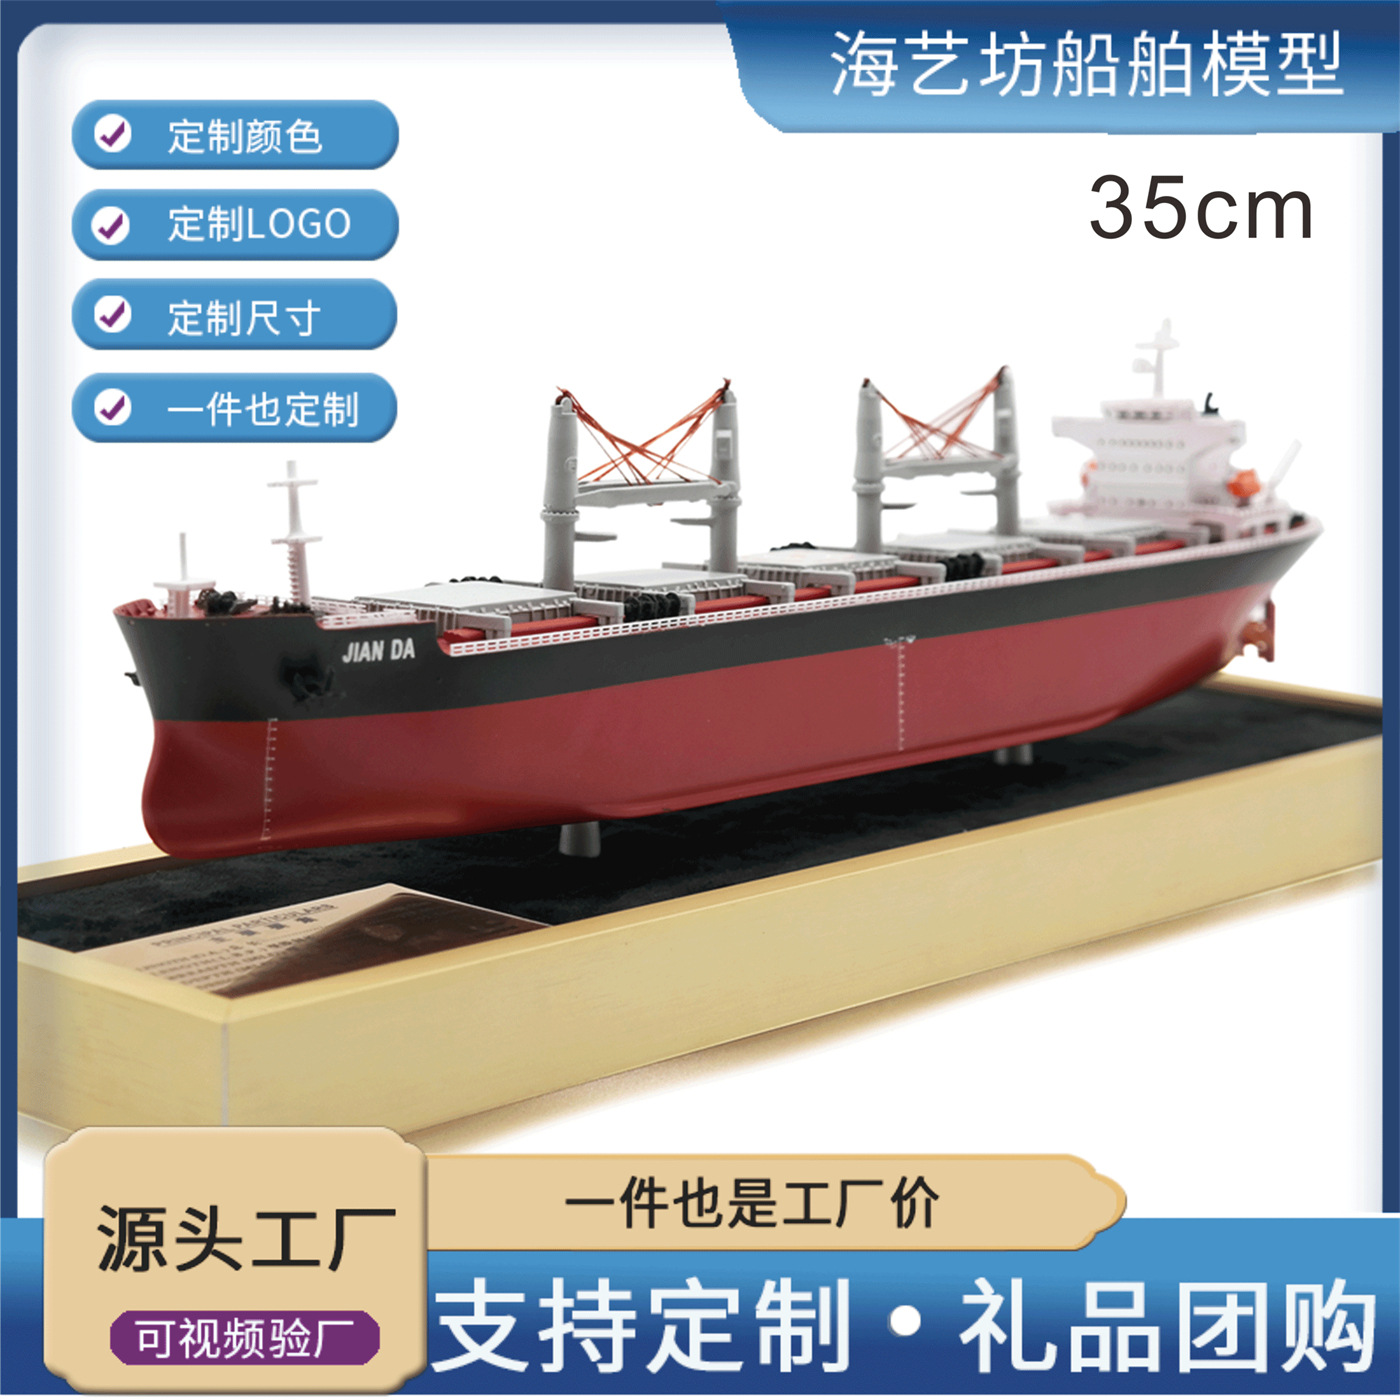 35cm五艙散貨船模型禮品 散貨船logo制作 海藝坊